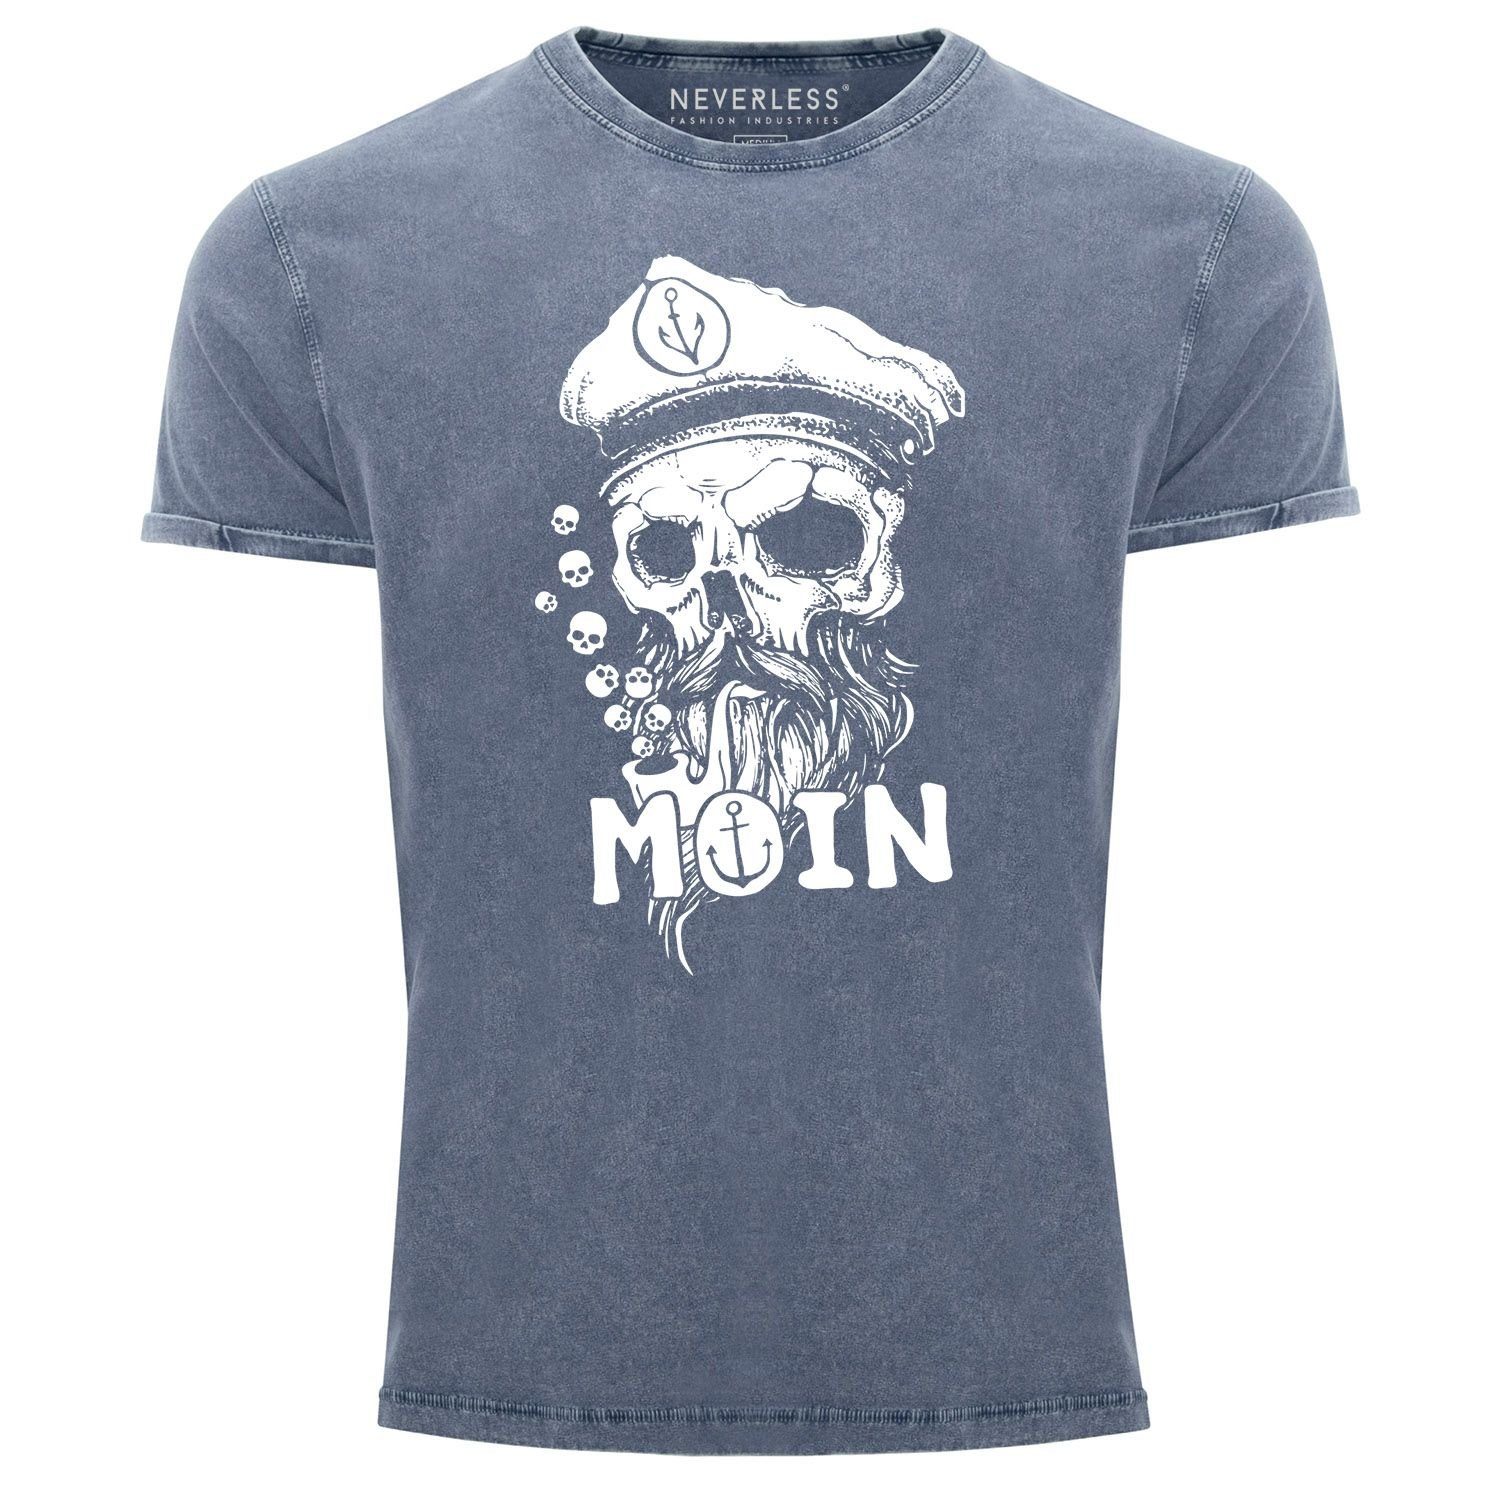 Neverless Print-Shirt Herren Printshirt Anker Look Aufdruck Neverless® blau Used Moin mit Bart Hamburg Totenkopf Vintage Kapitän Print Shirt T-Shirt